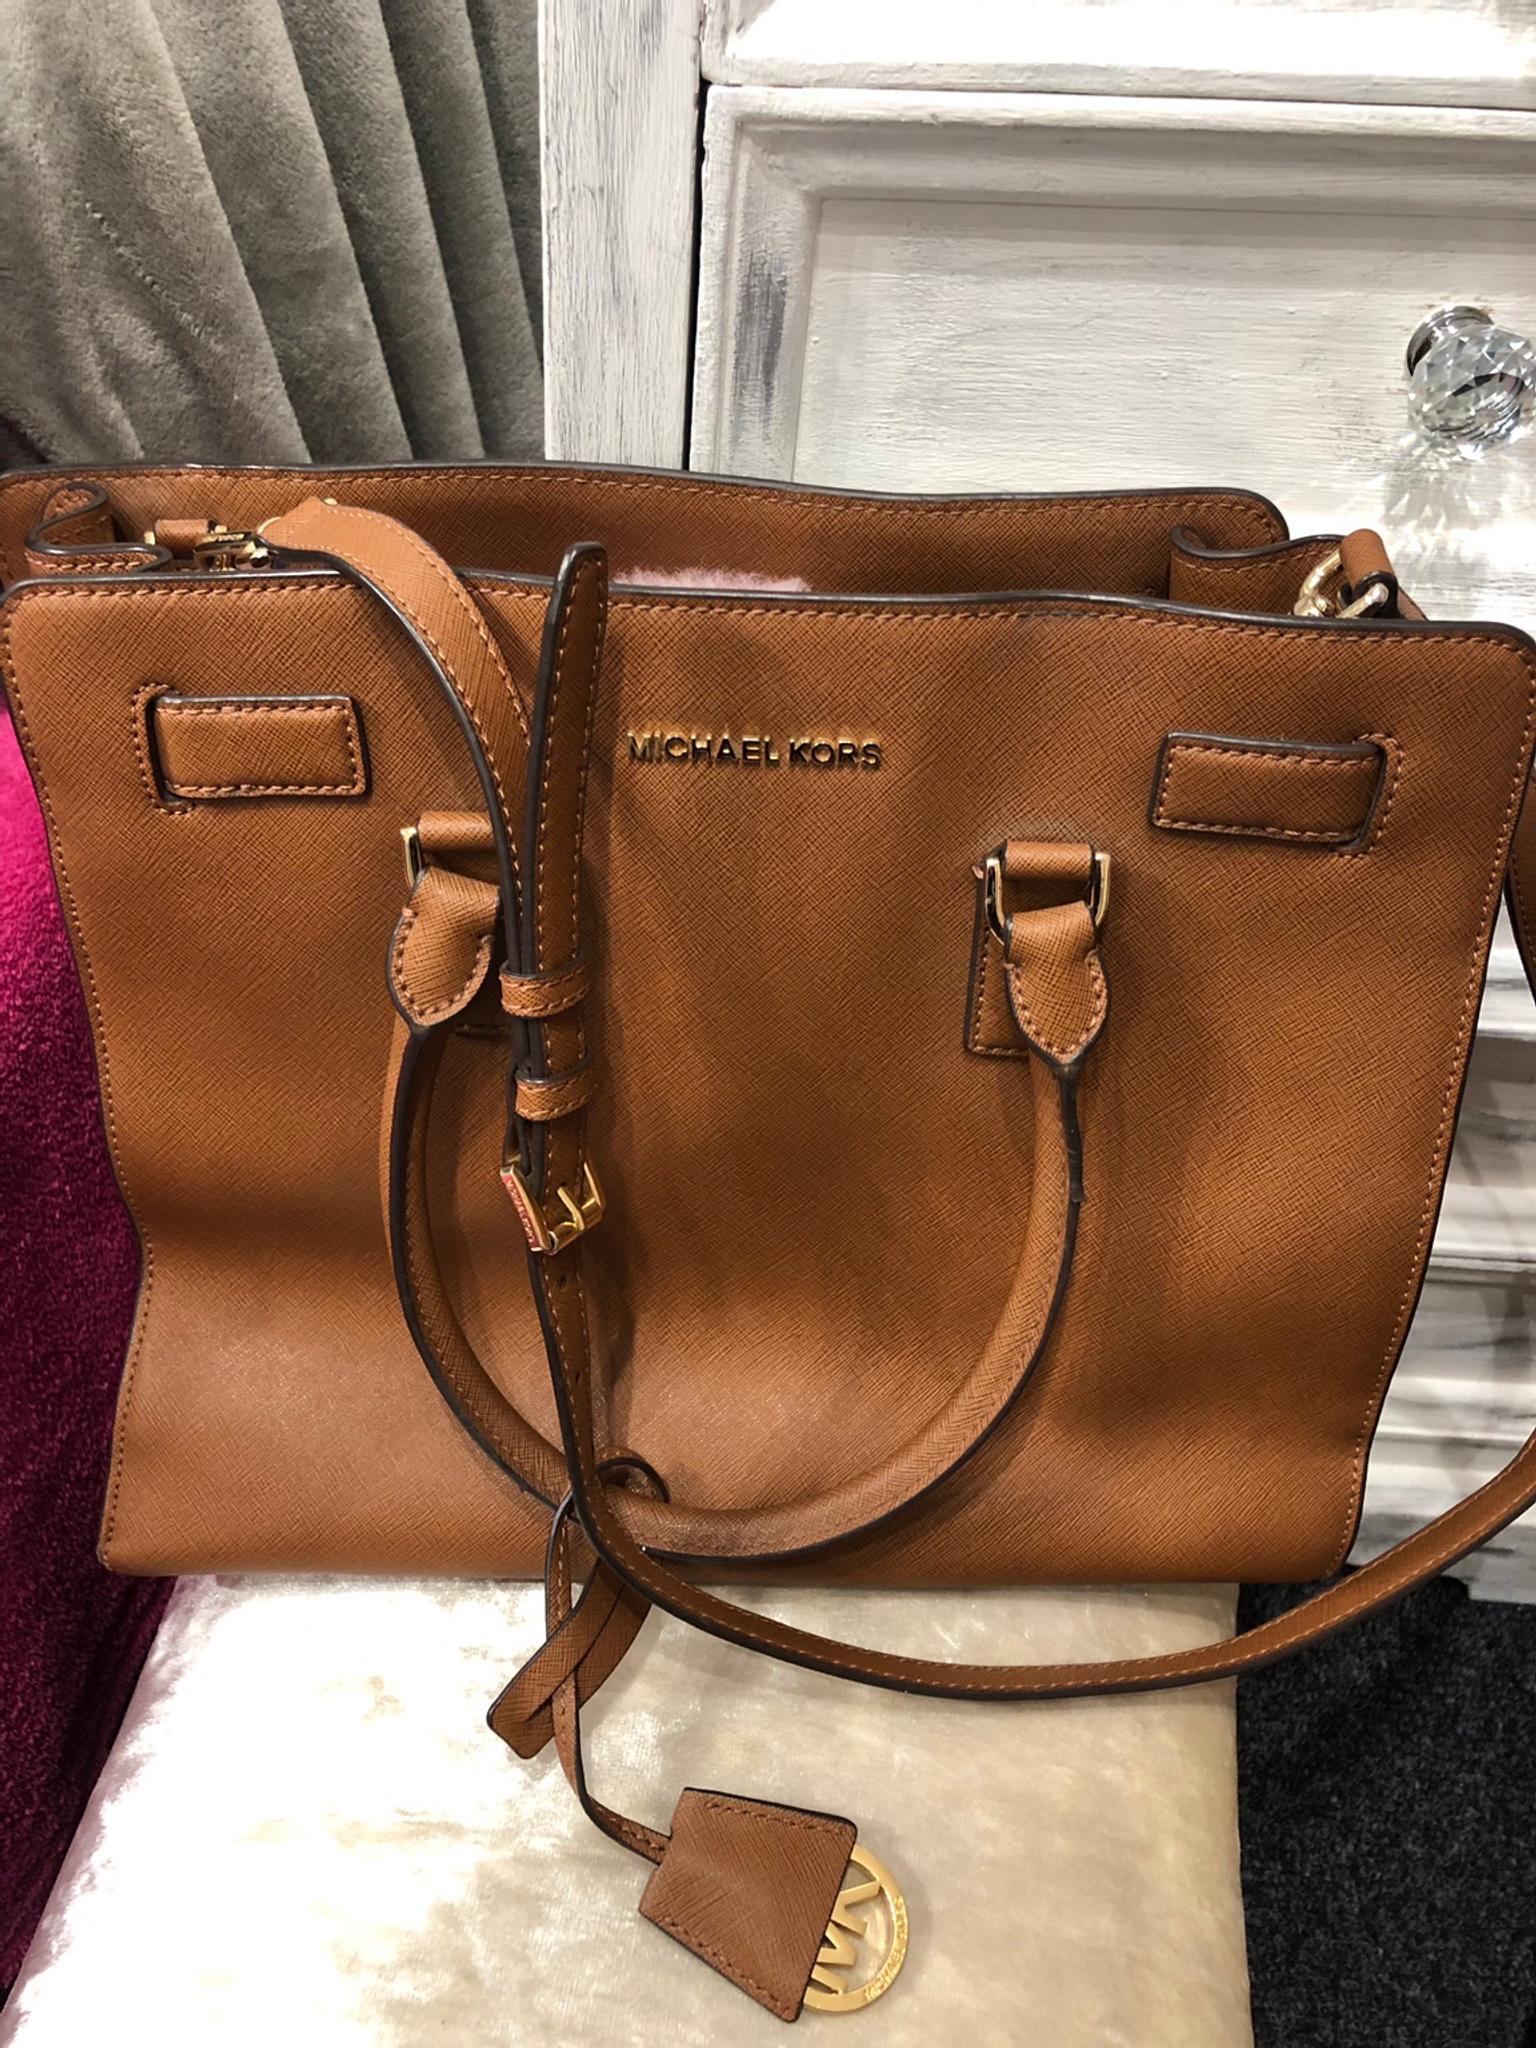 Michael Kors genuine leather bag in 